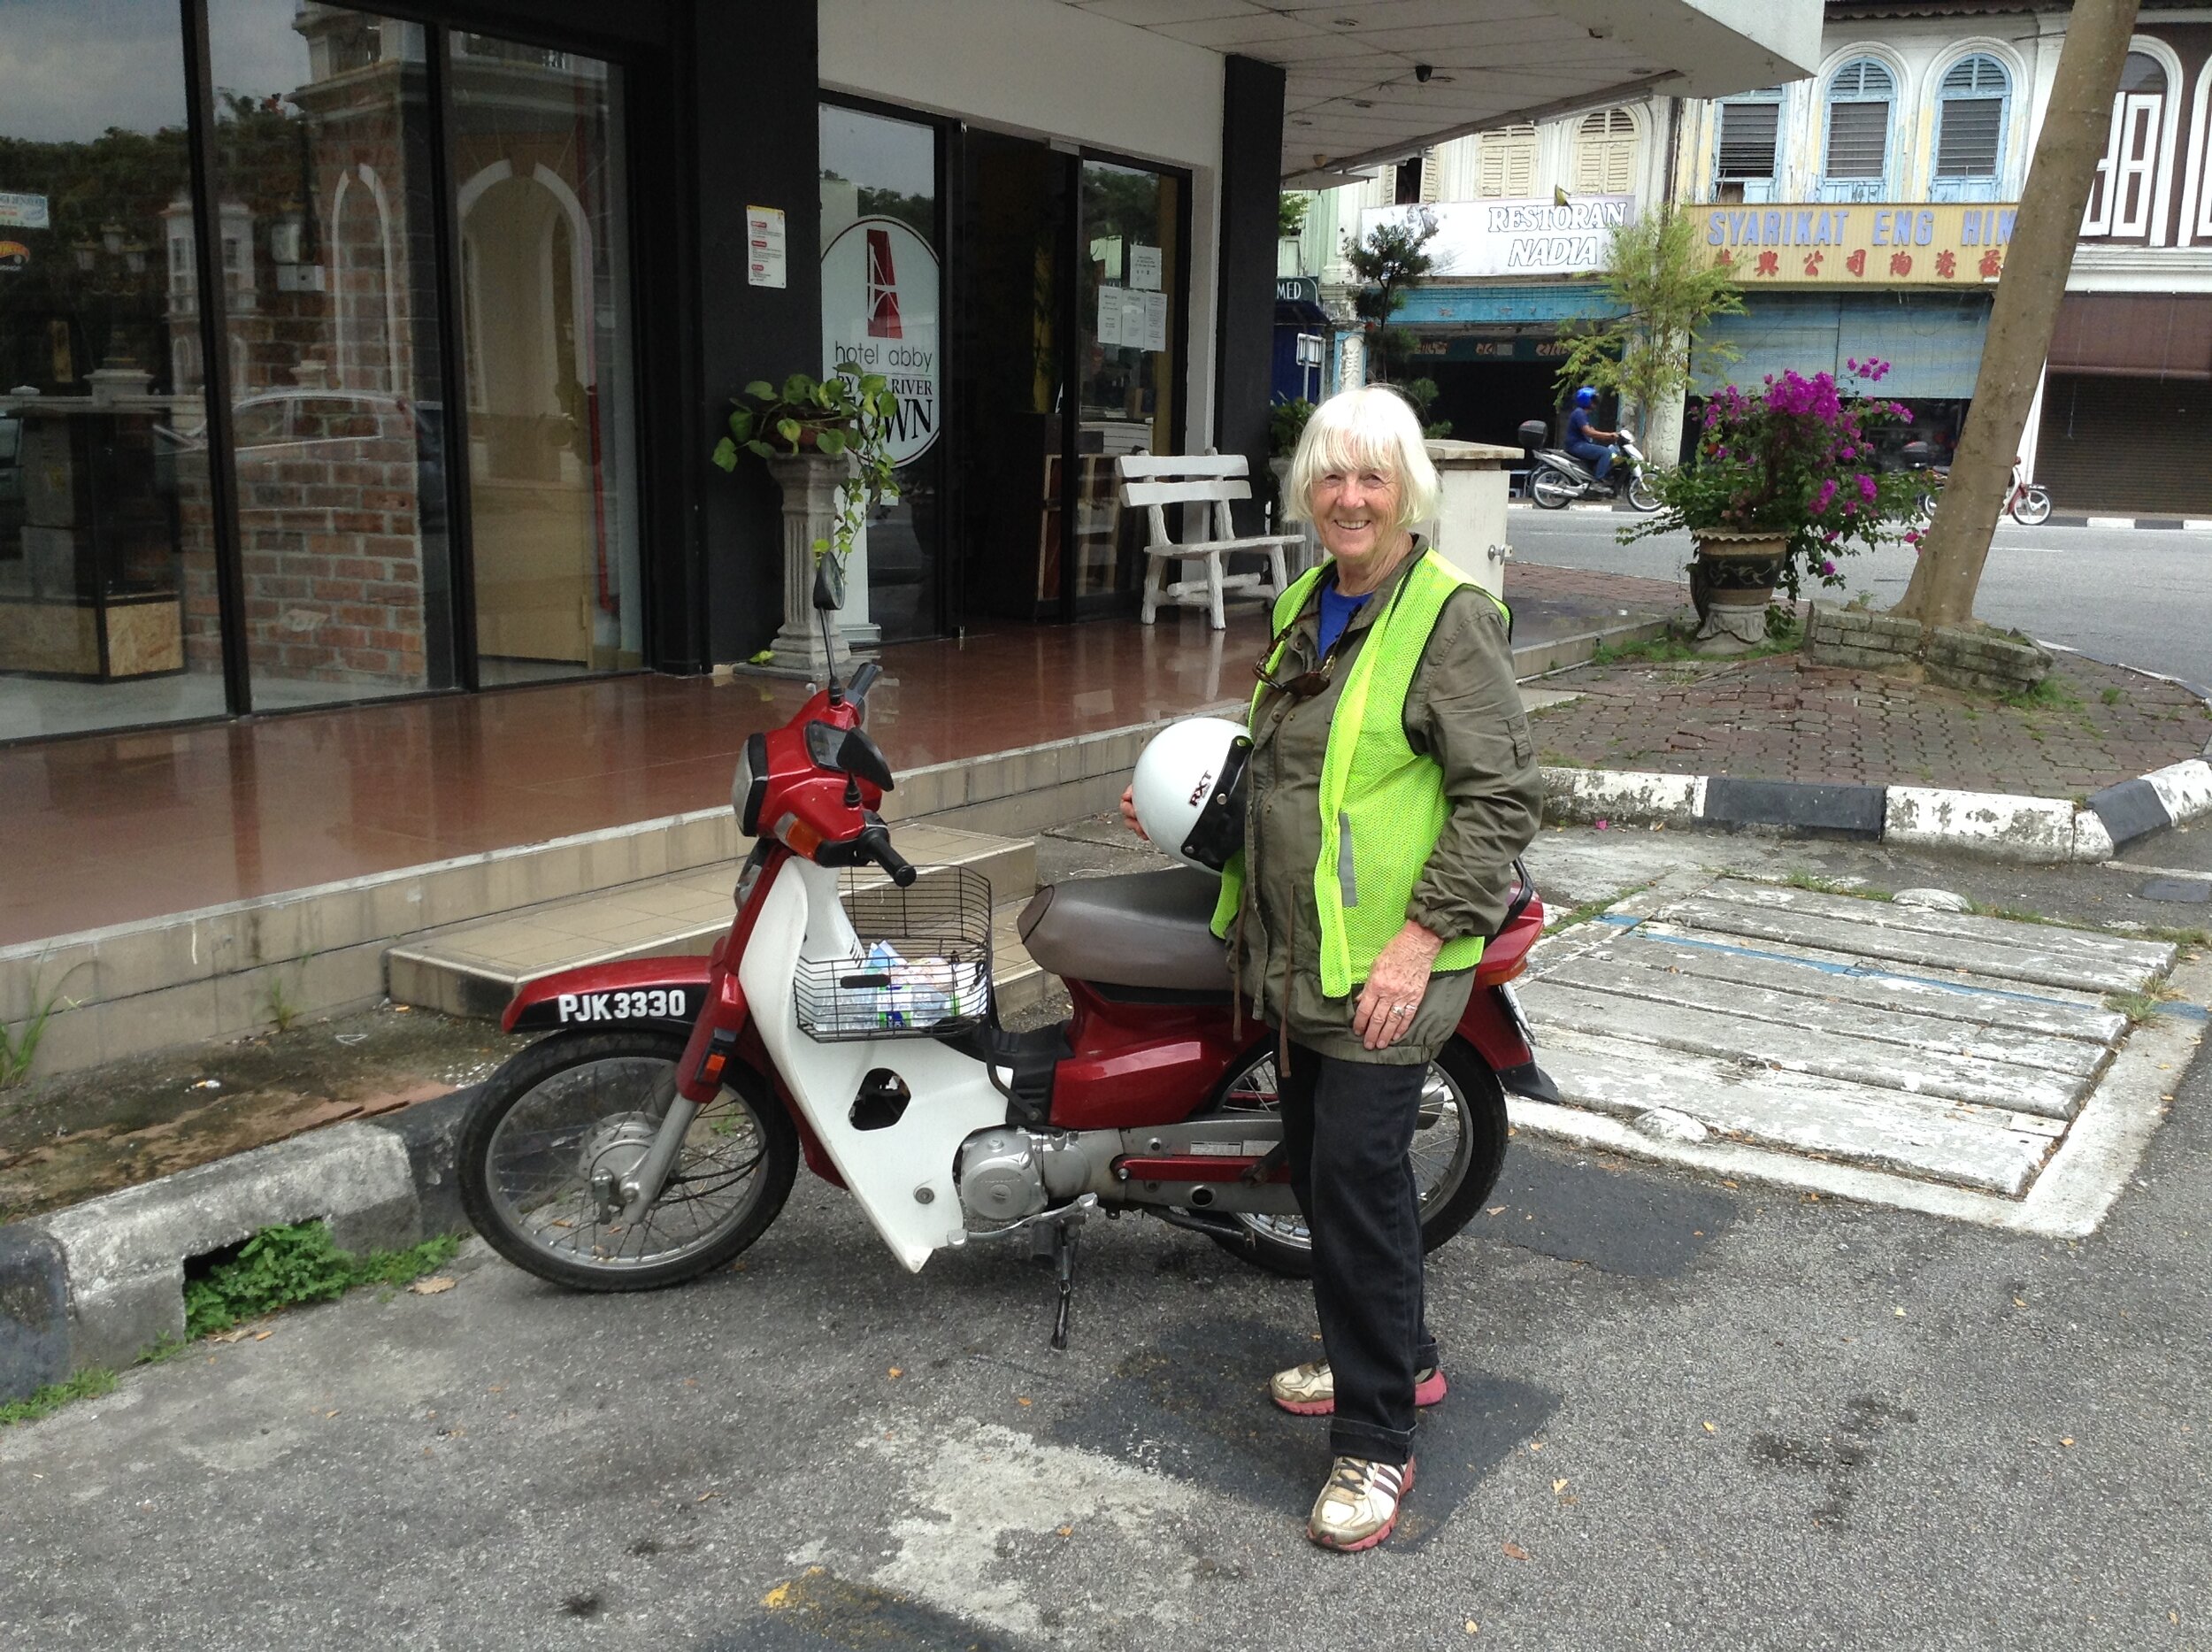 Linda-Bick-Malaysia-Adventure-Rider-Radio-Motorcycle-Podcast-1.JPG